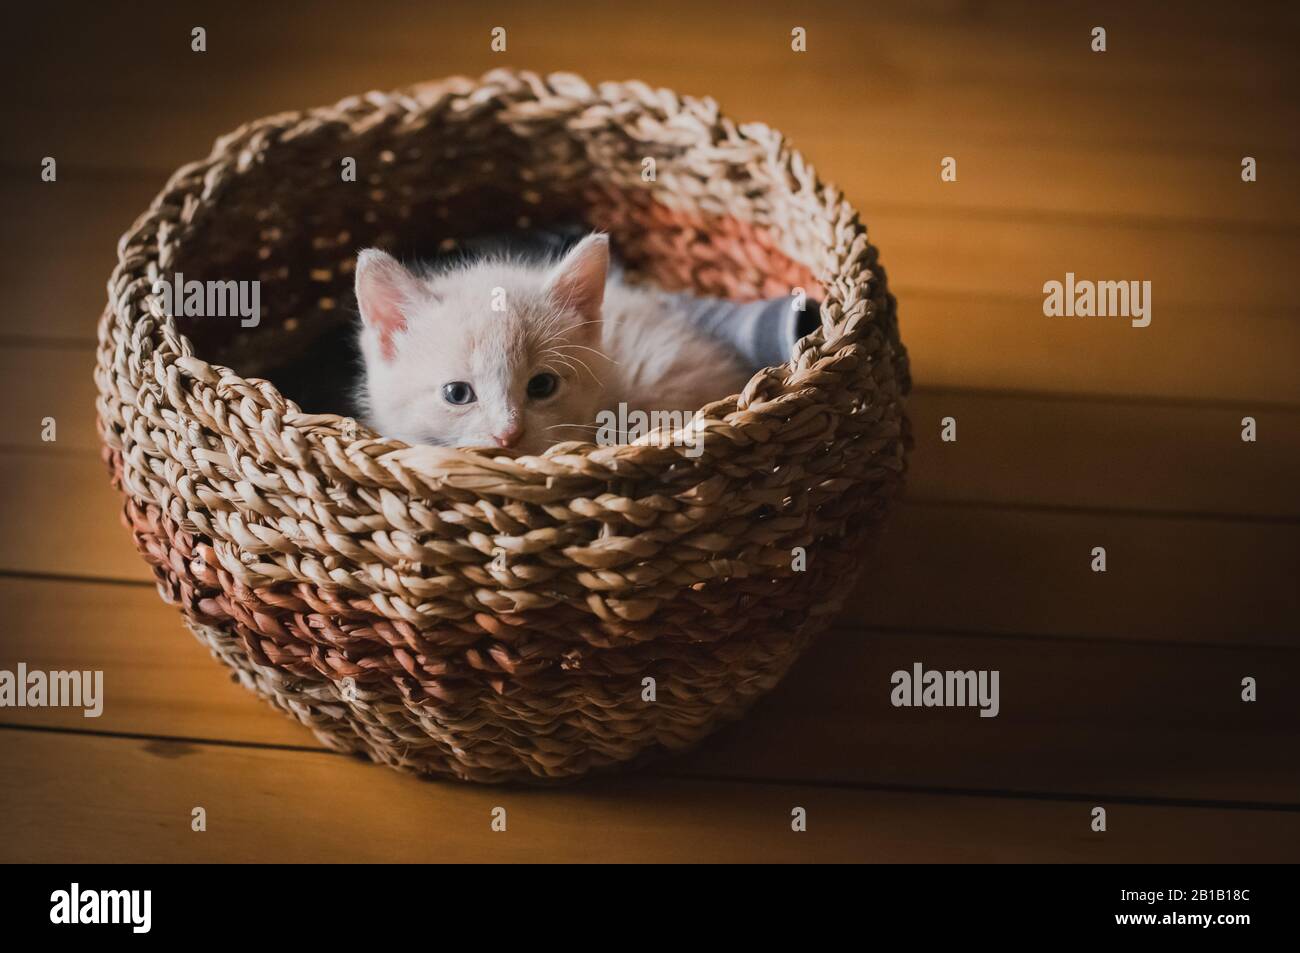 Cute tan kitten peeking out over the top of a wicker basket. Stock Photo